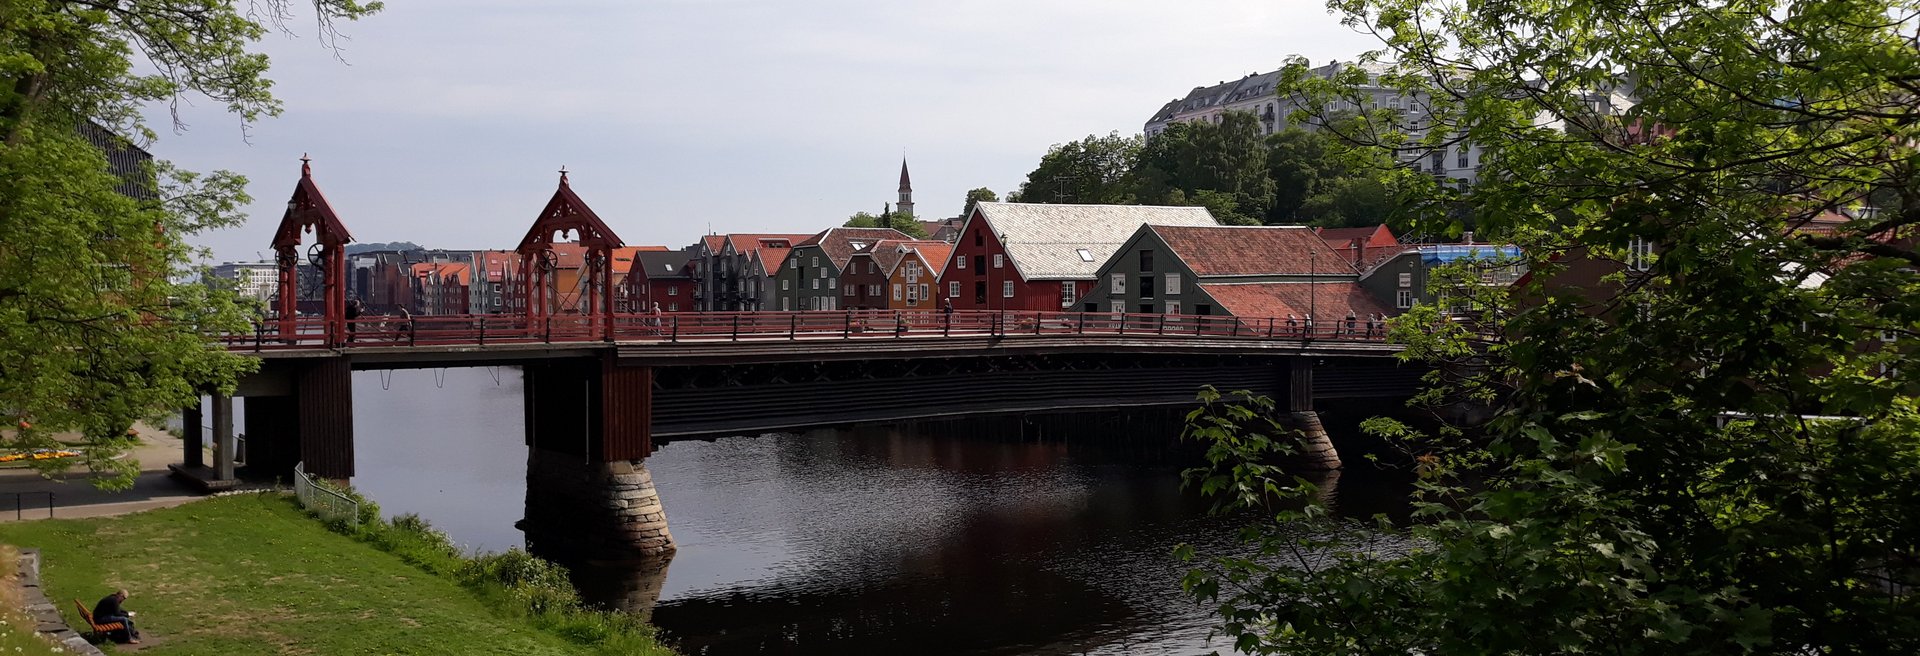 Alte Brücke in Trondheim